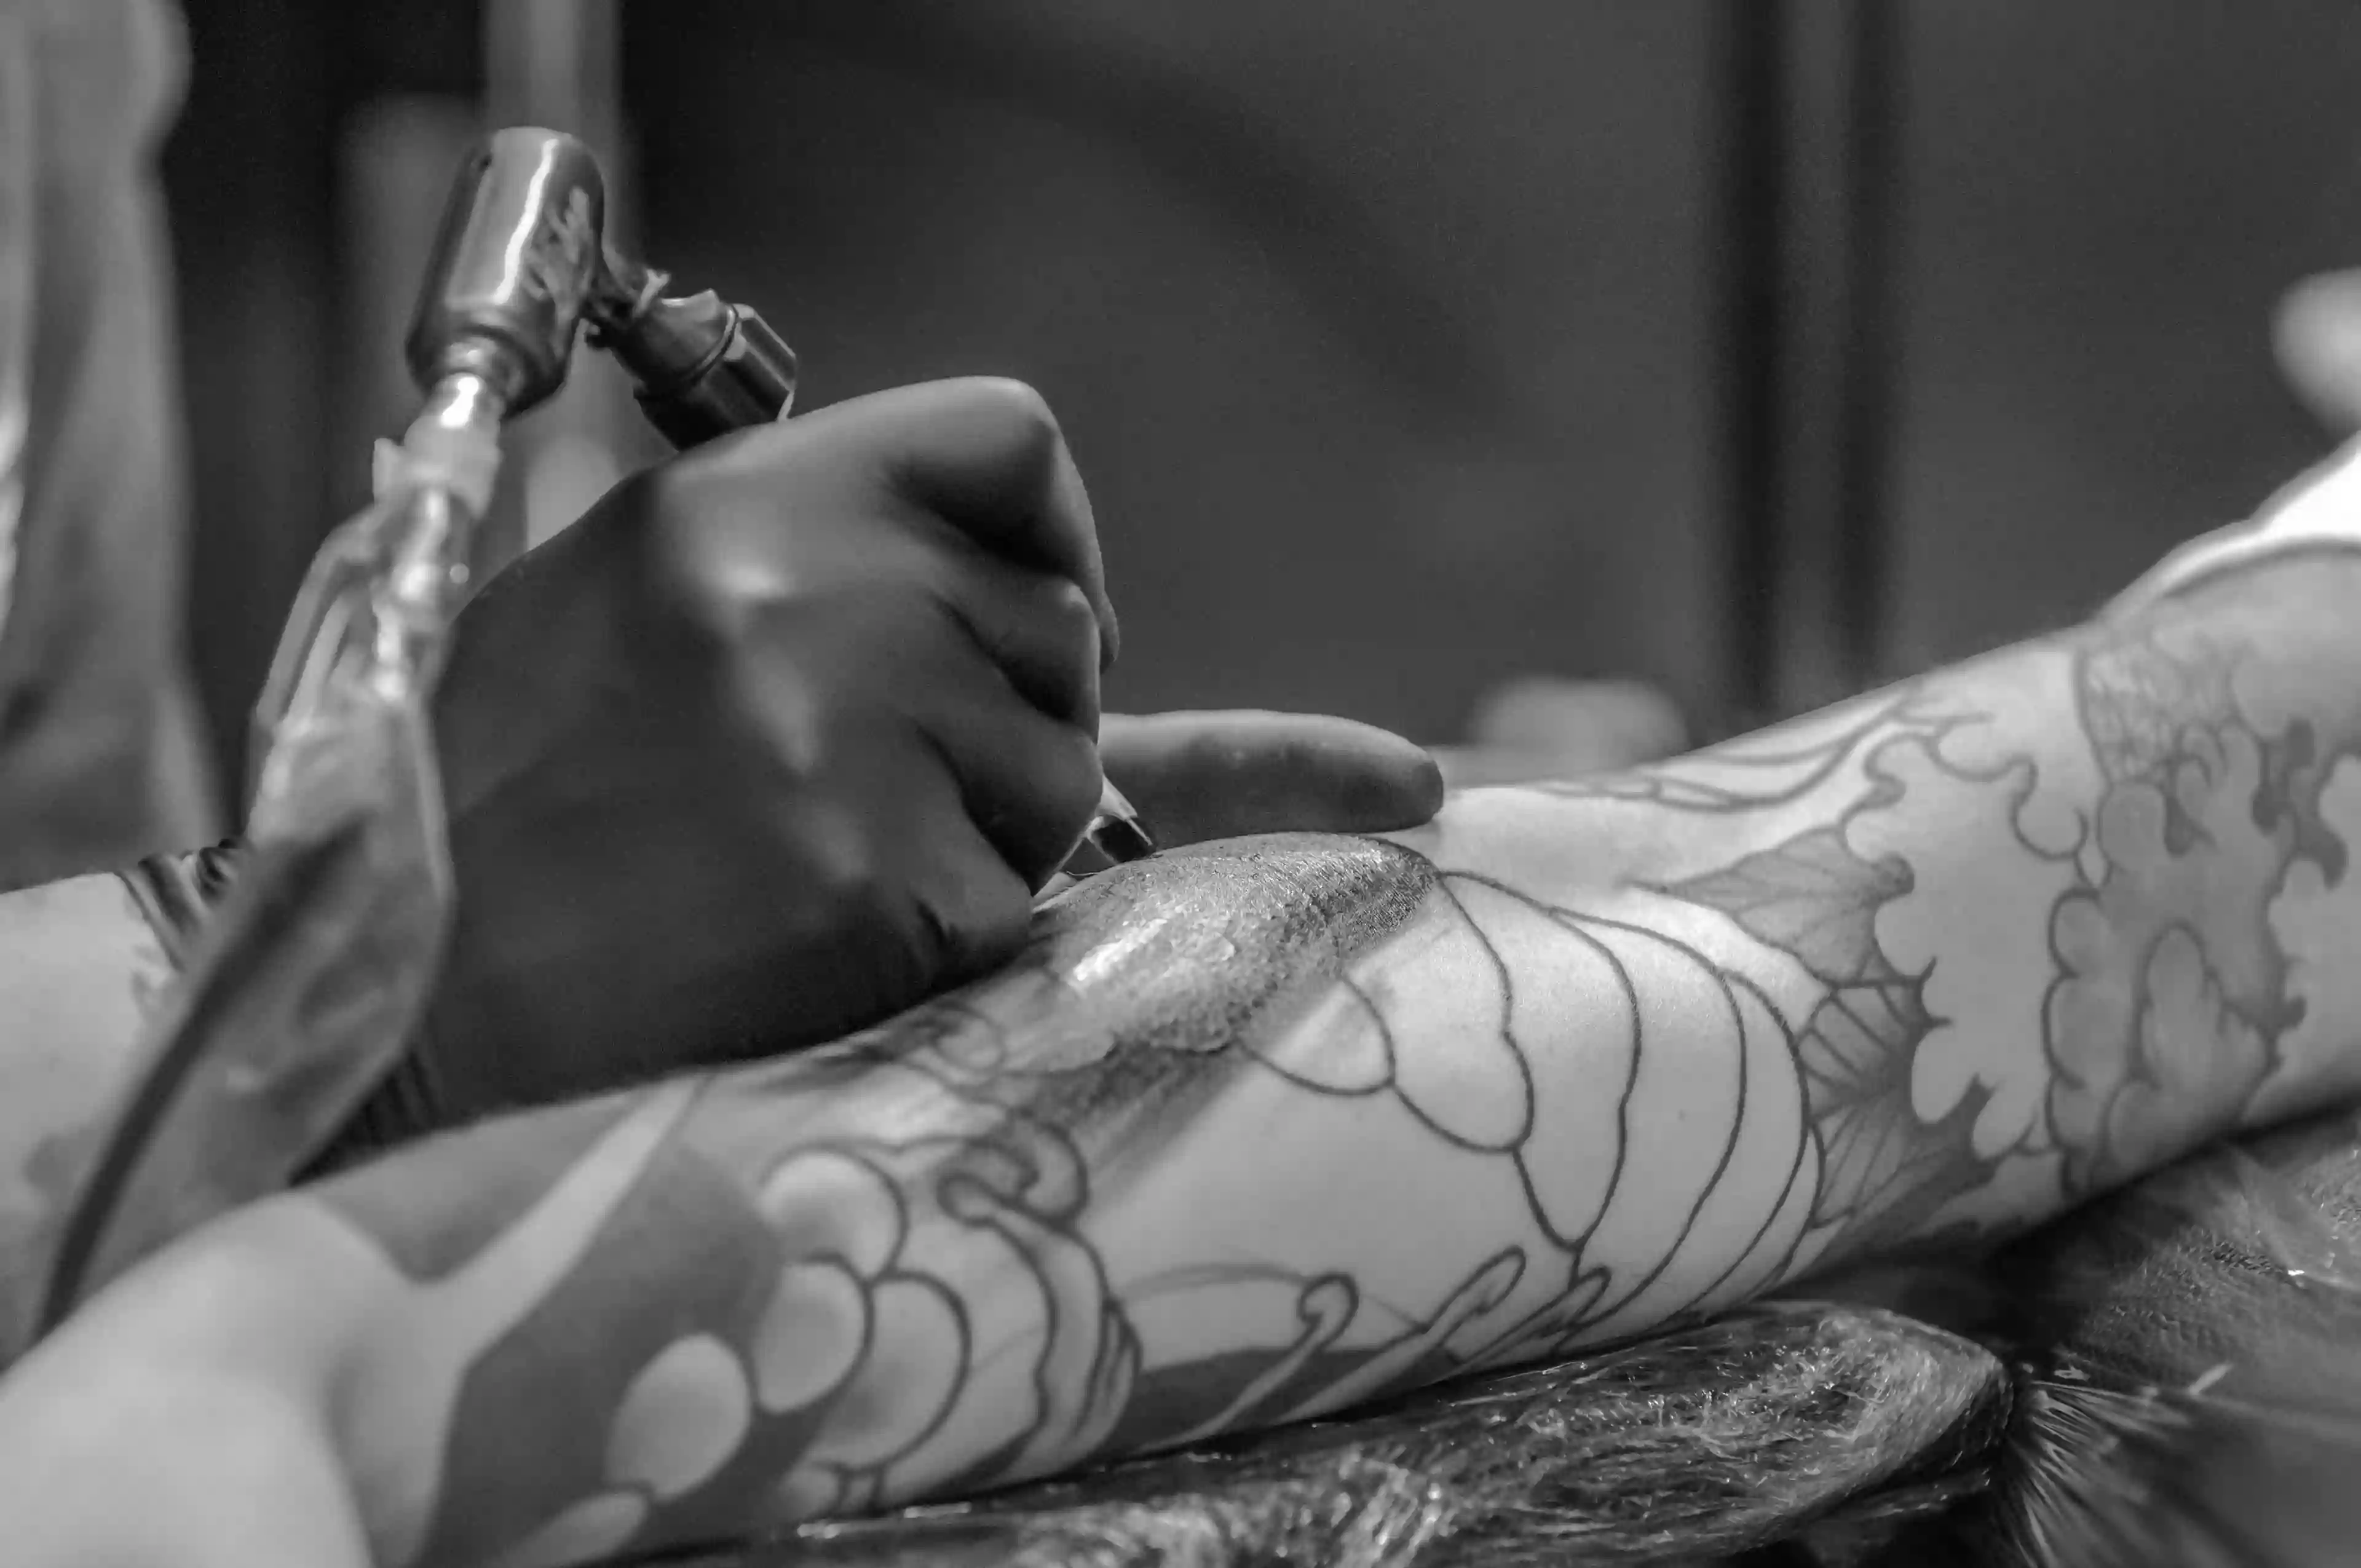 The Valparaiso Tattoo Collective